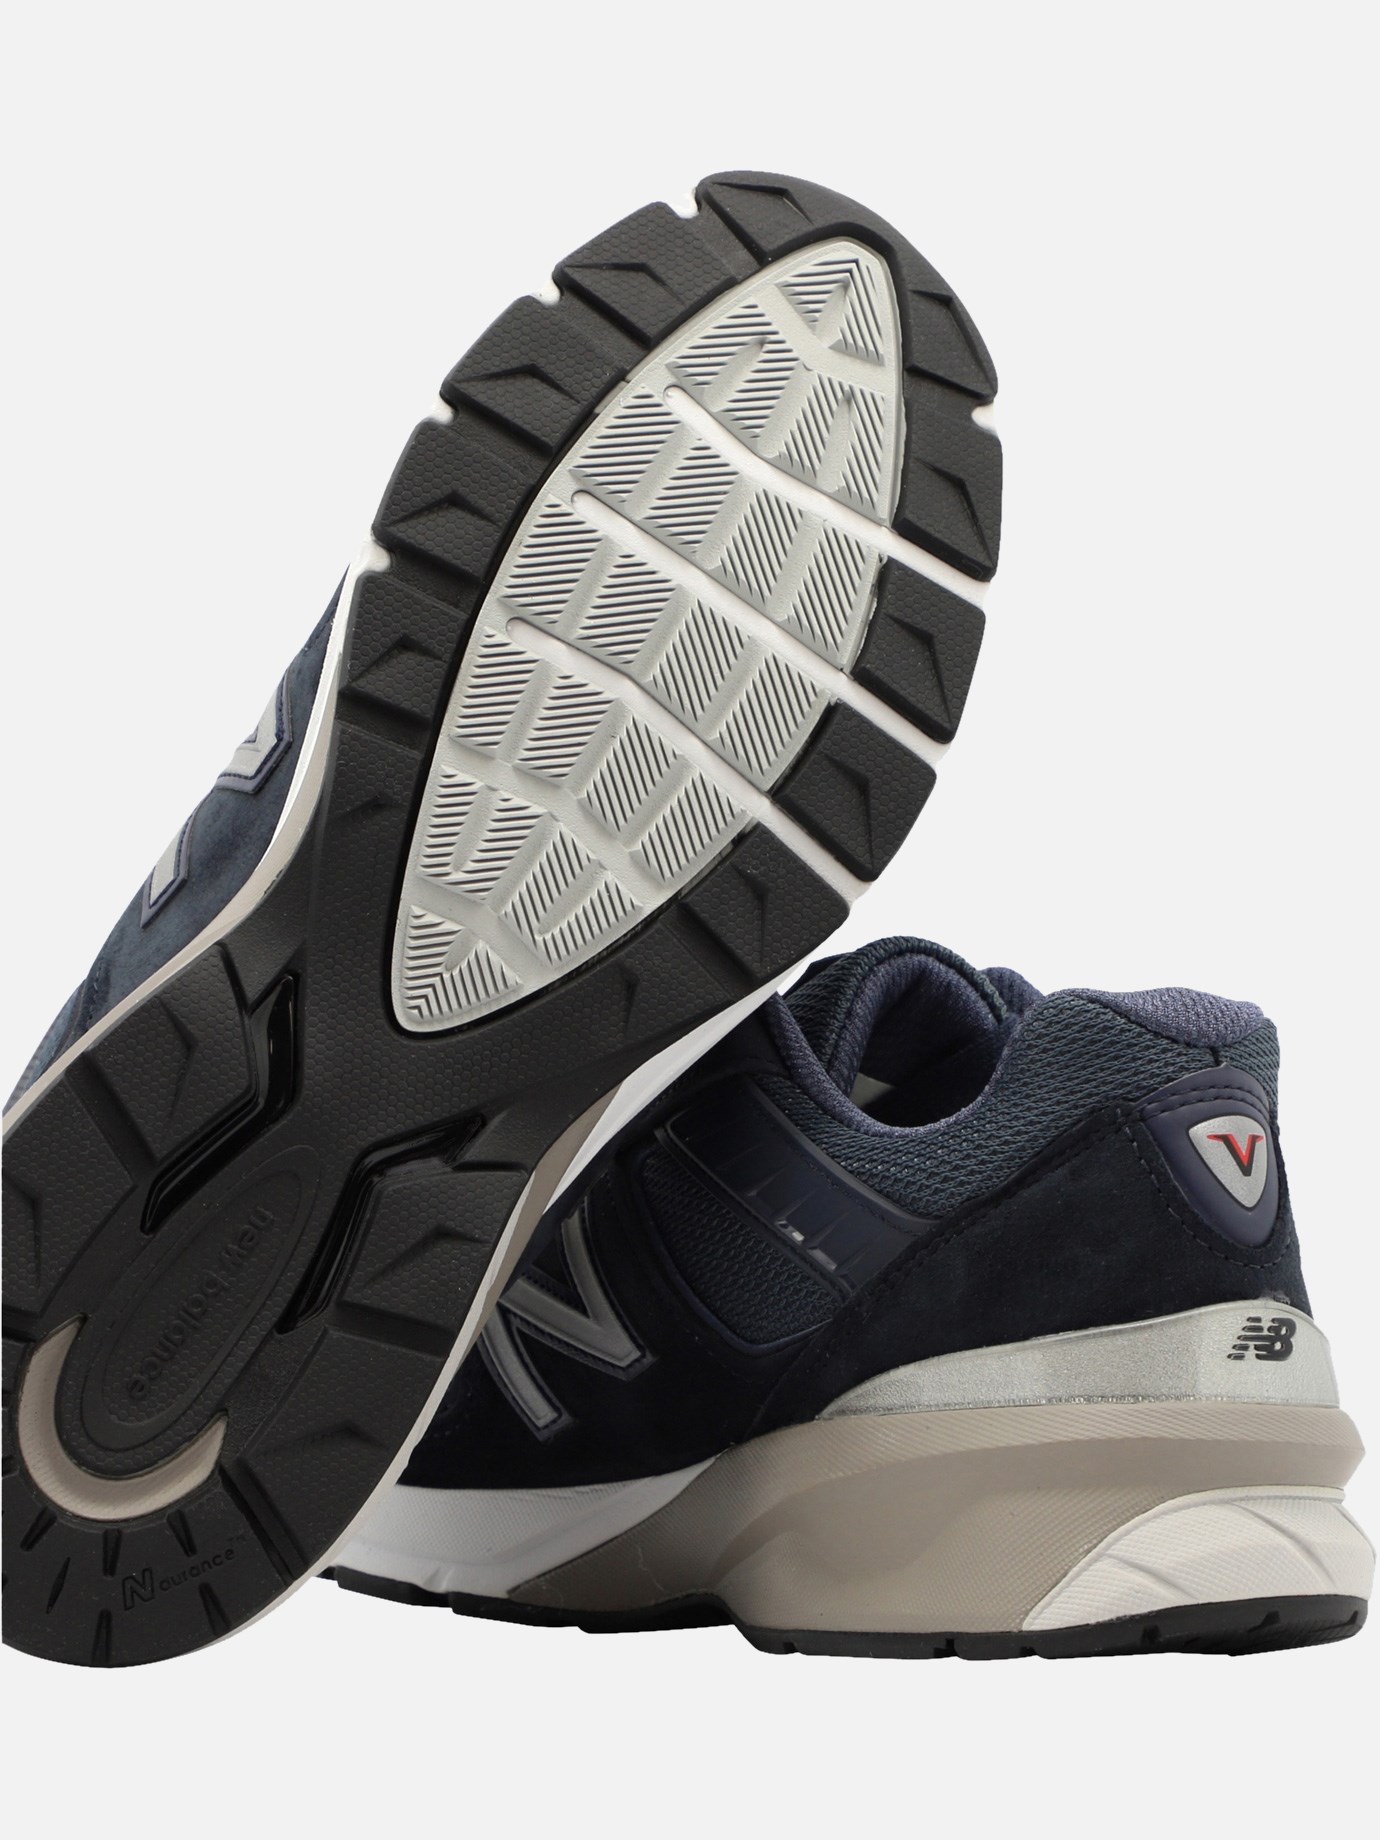 Sneaker  990V5  by New Balance